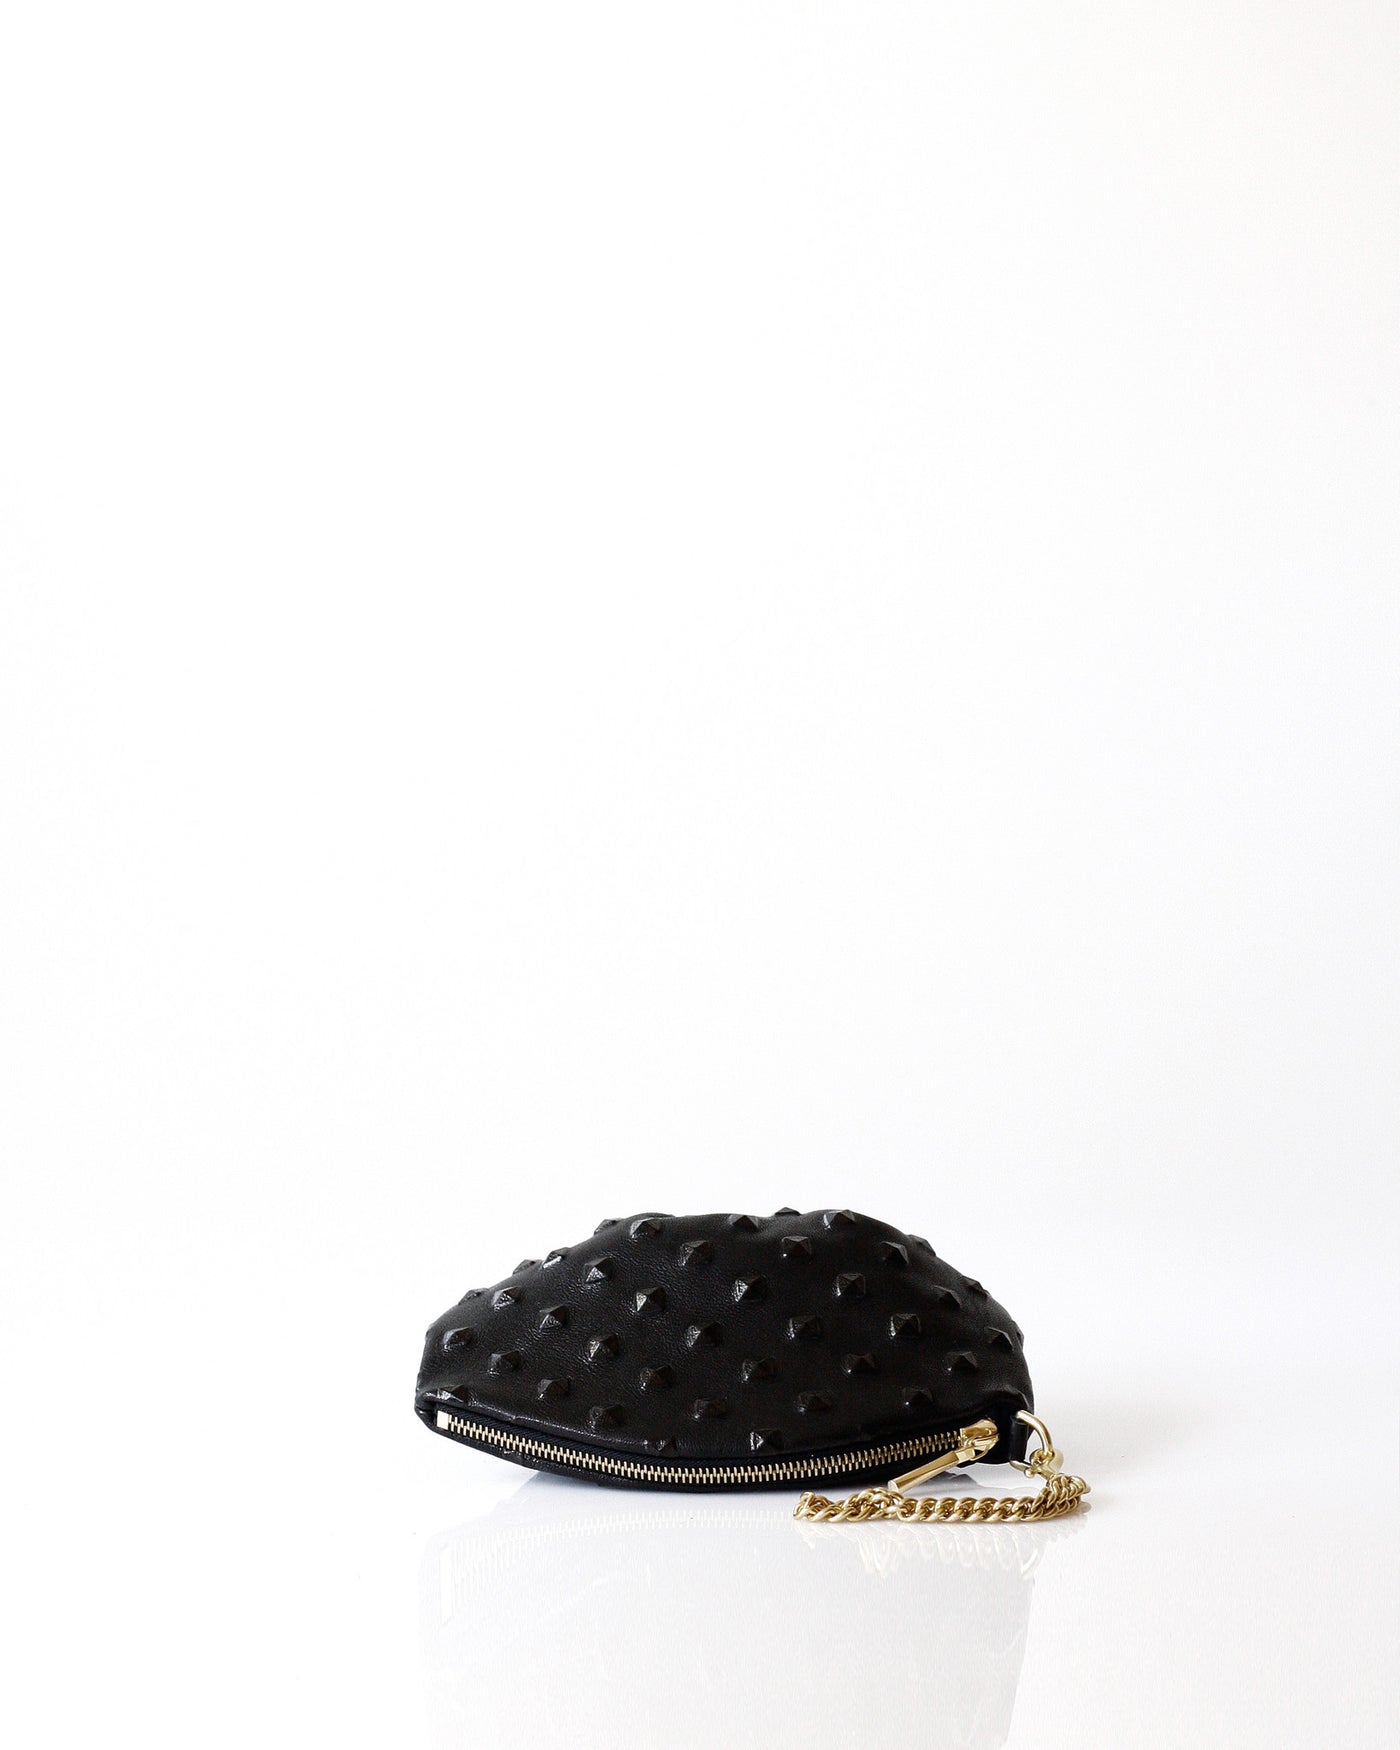 m Pochette | BLK Studded - OPELLE bag opelle handbag opellecreative